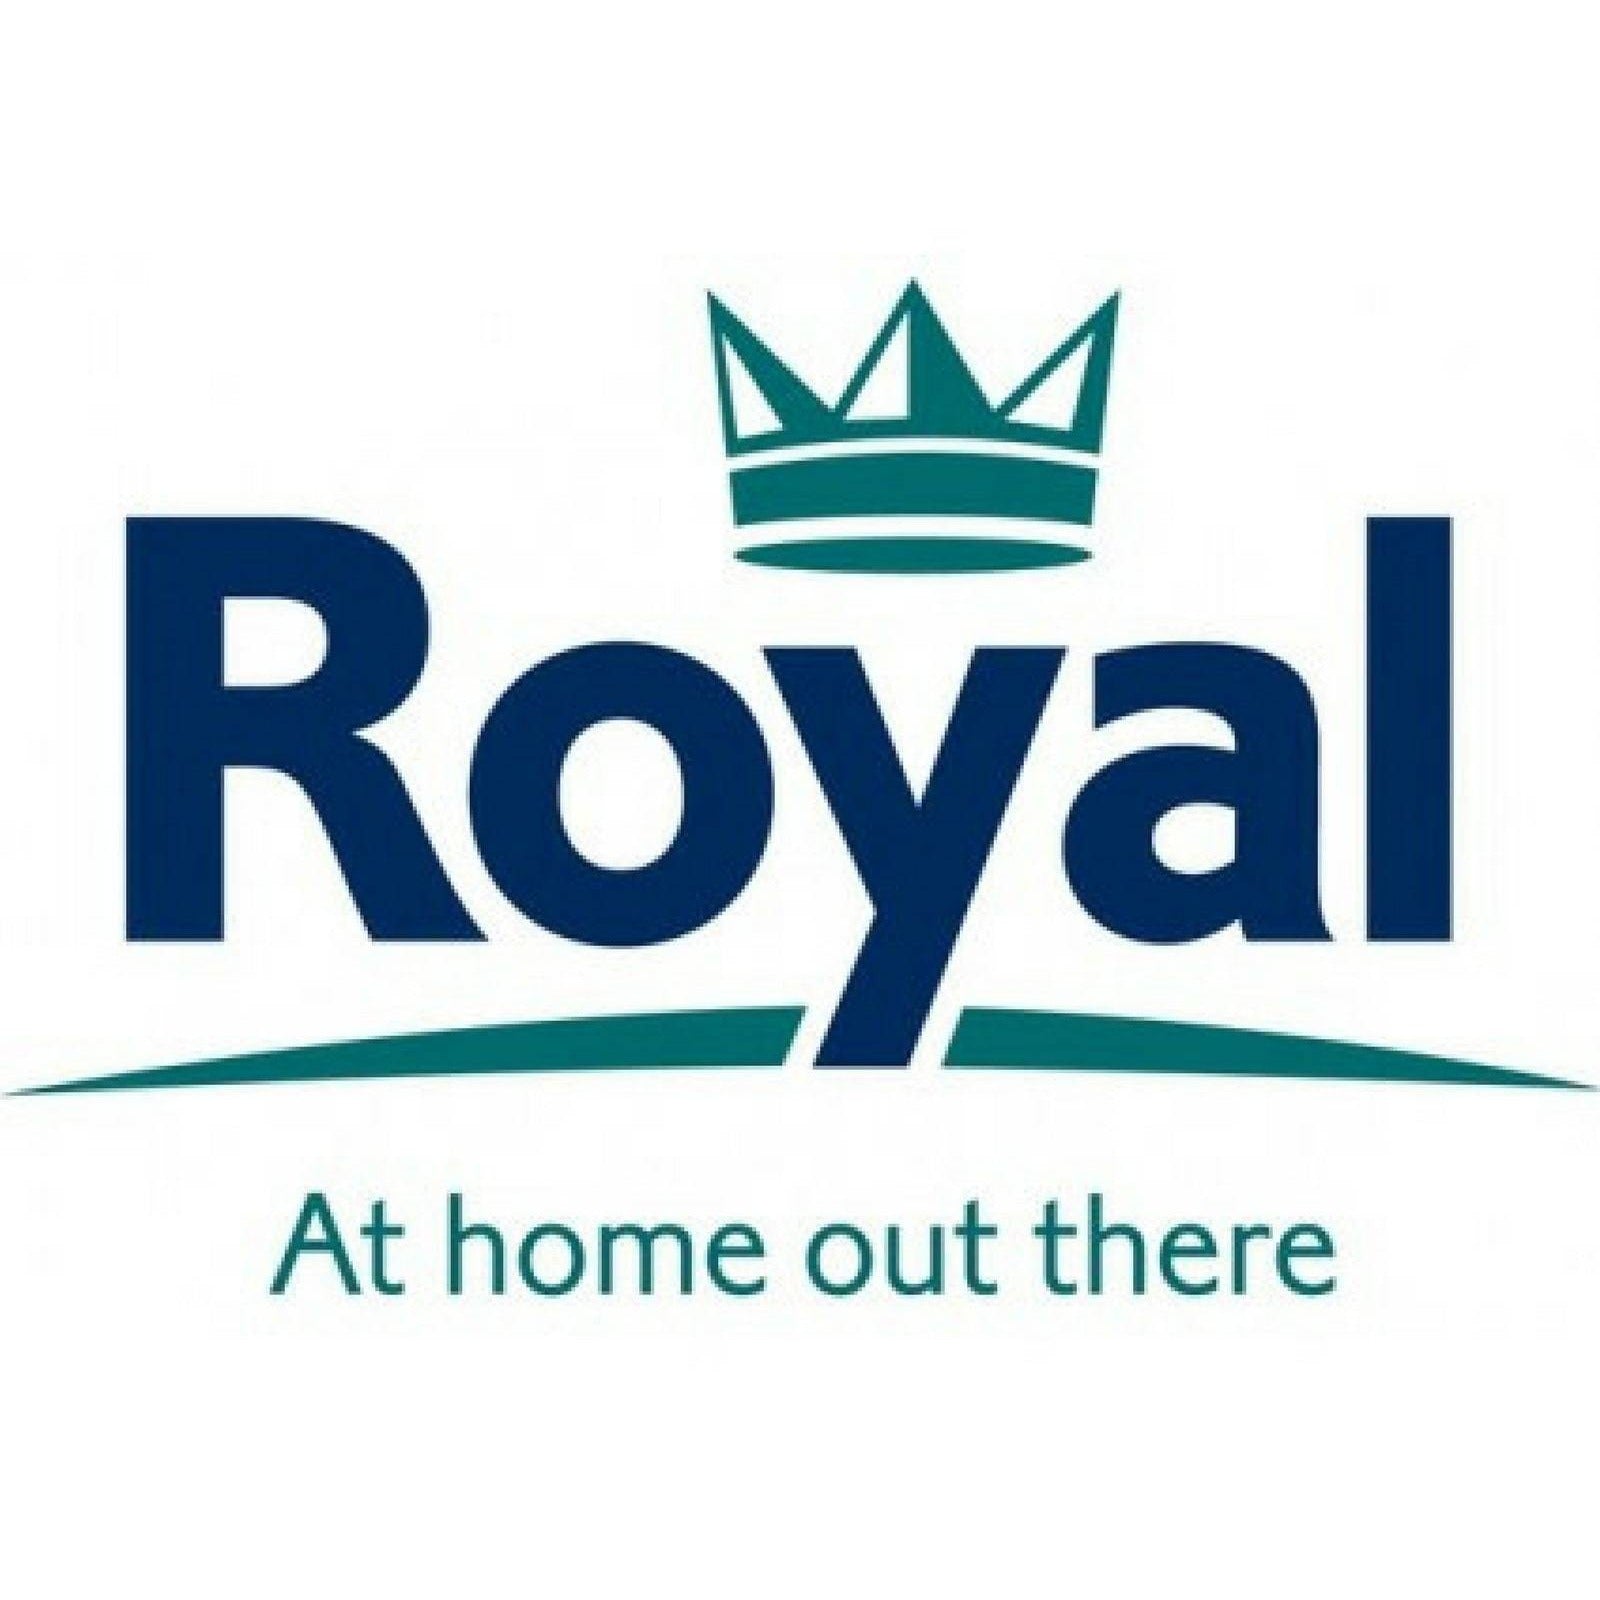 Royal Oxhill 260 Awning 302627 - Quality Caravan Awnings